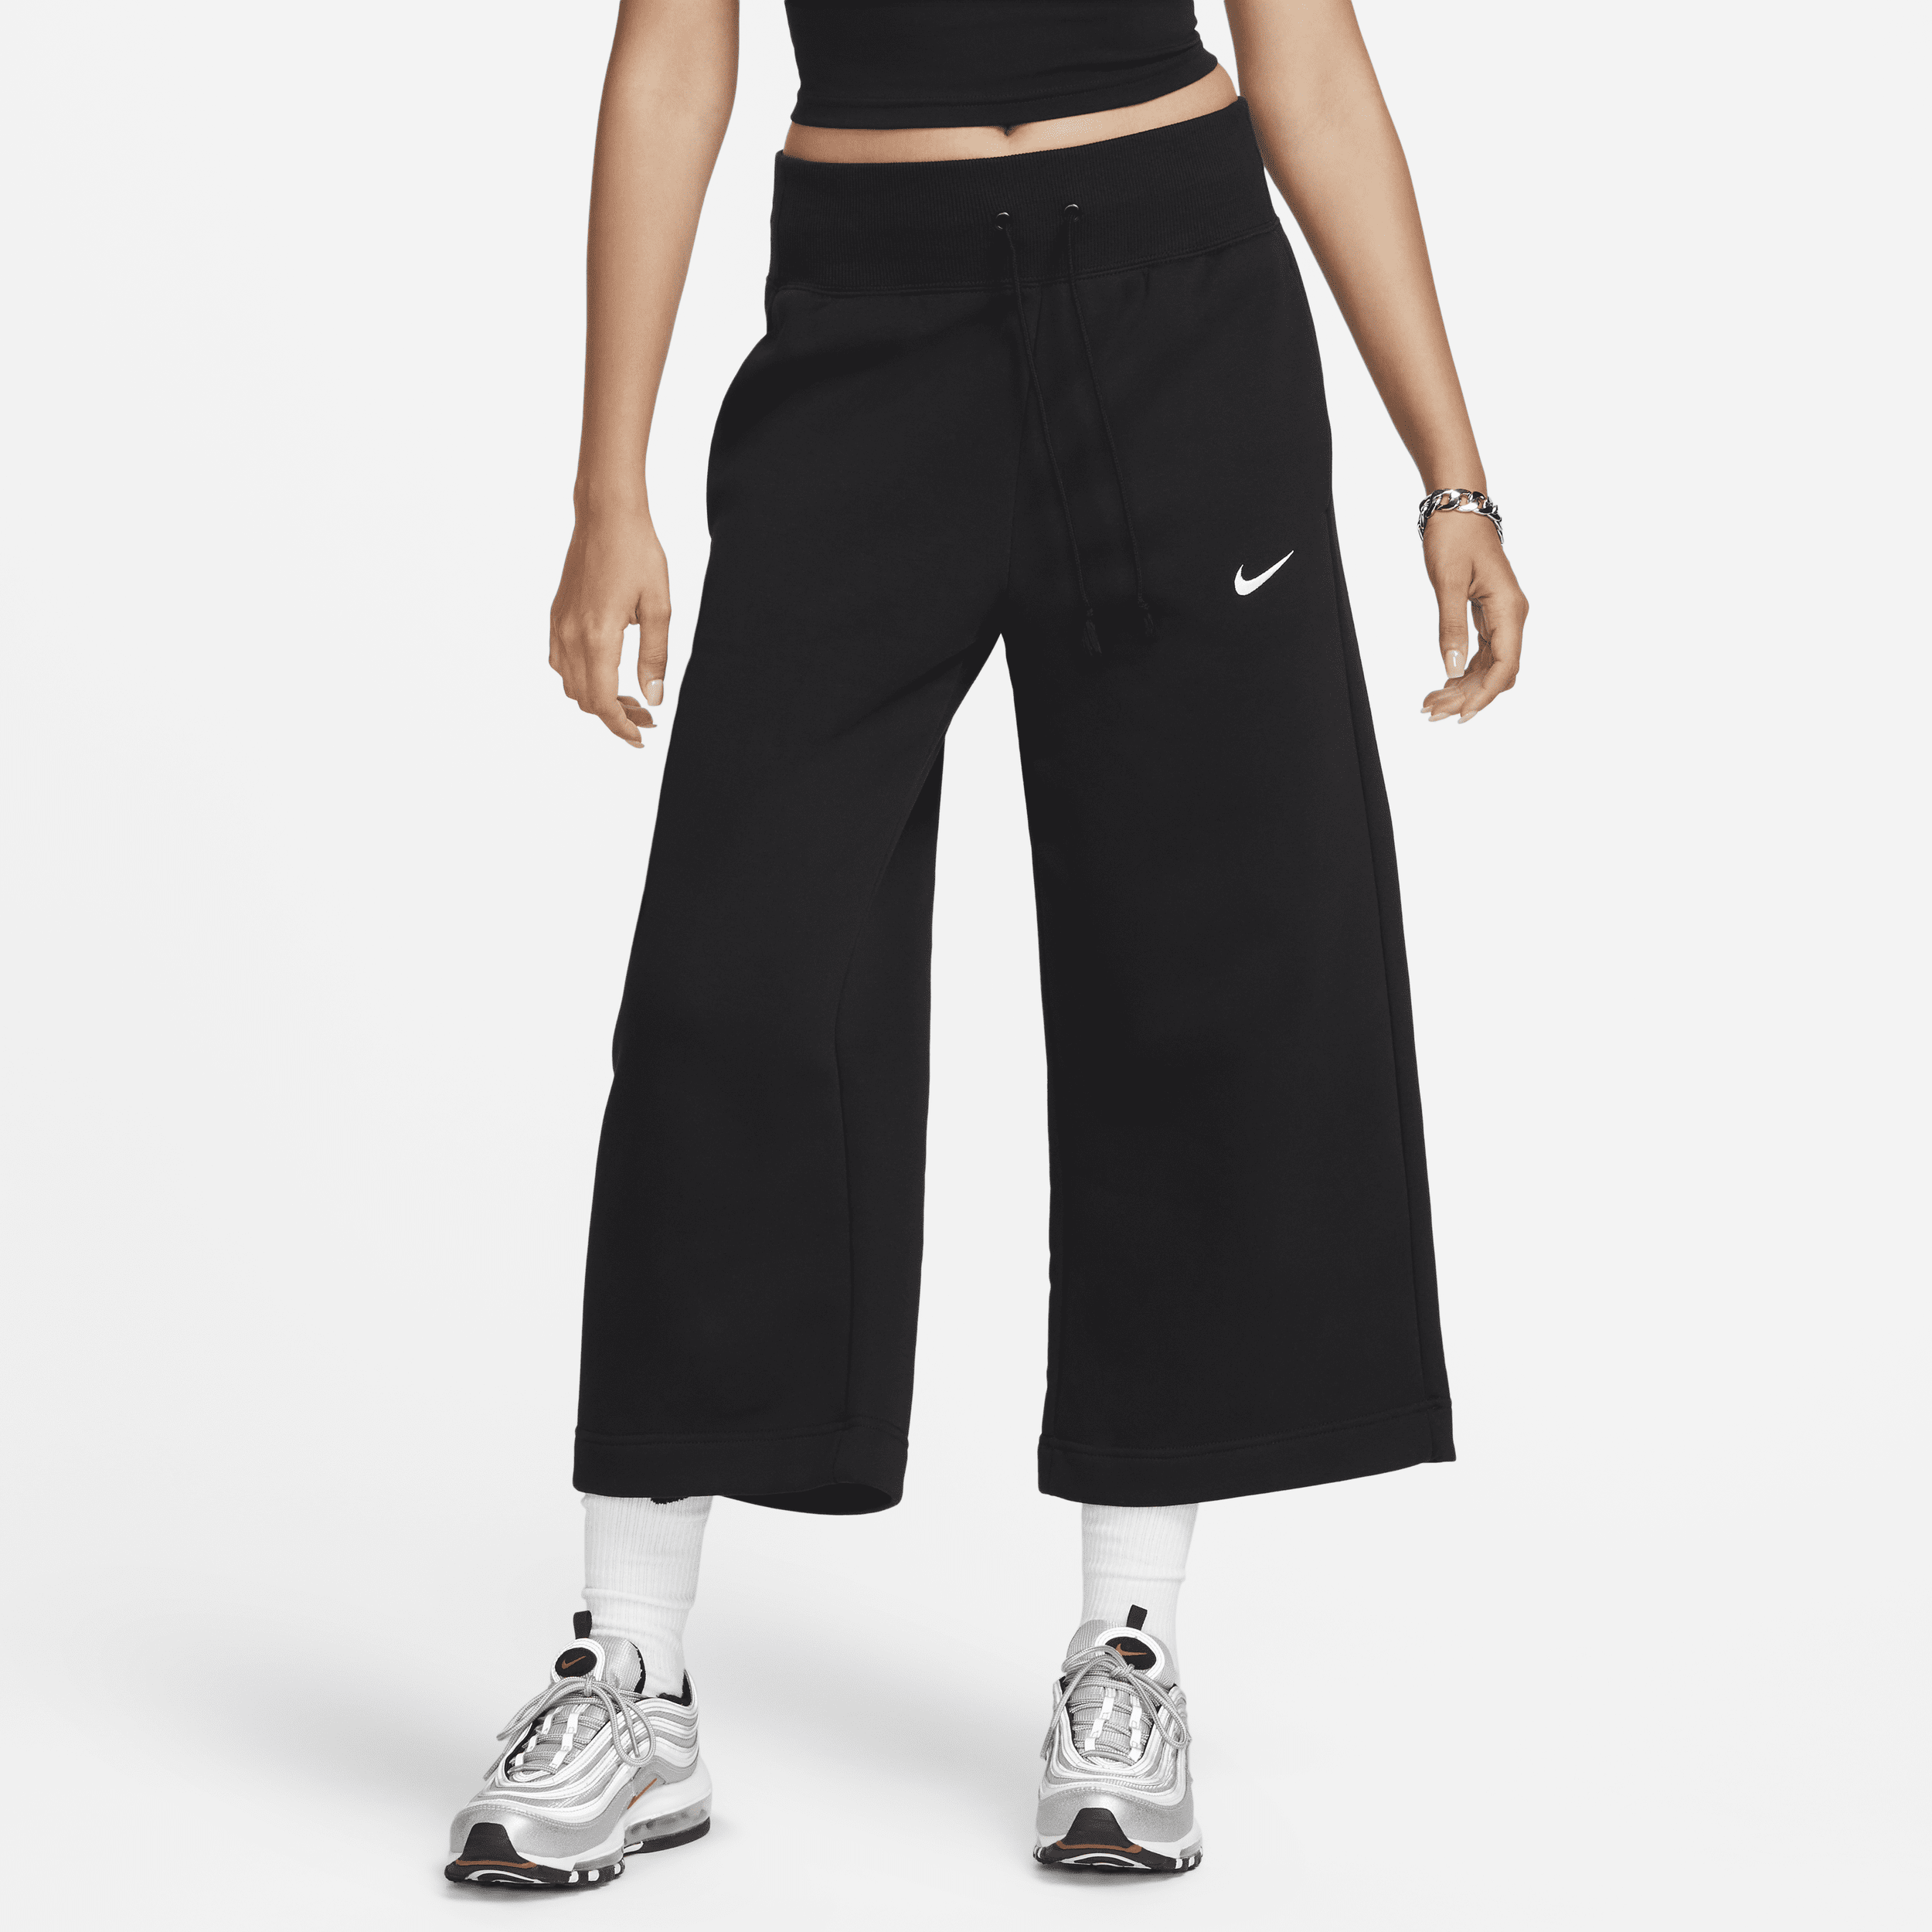 Pantaloni tuta a vita alta e lunghezza ridotta Nike Sportswear Phoenix Fleece – Donna - Nero